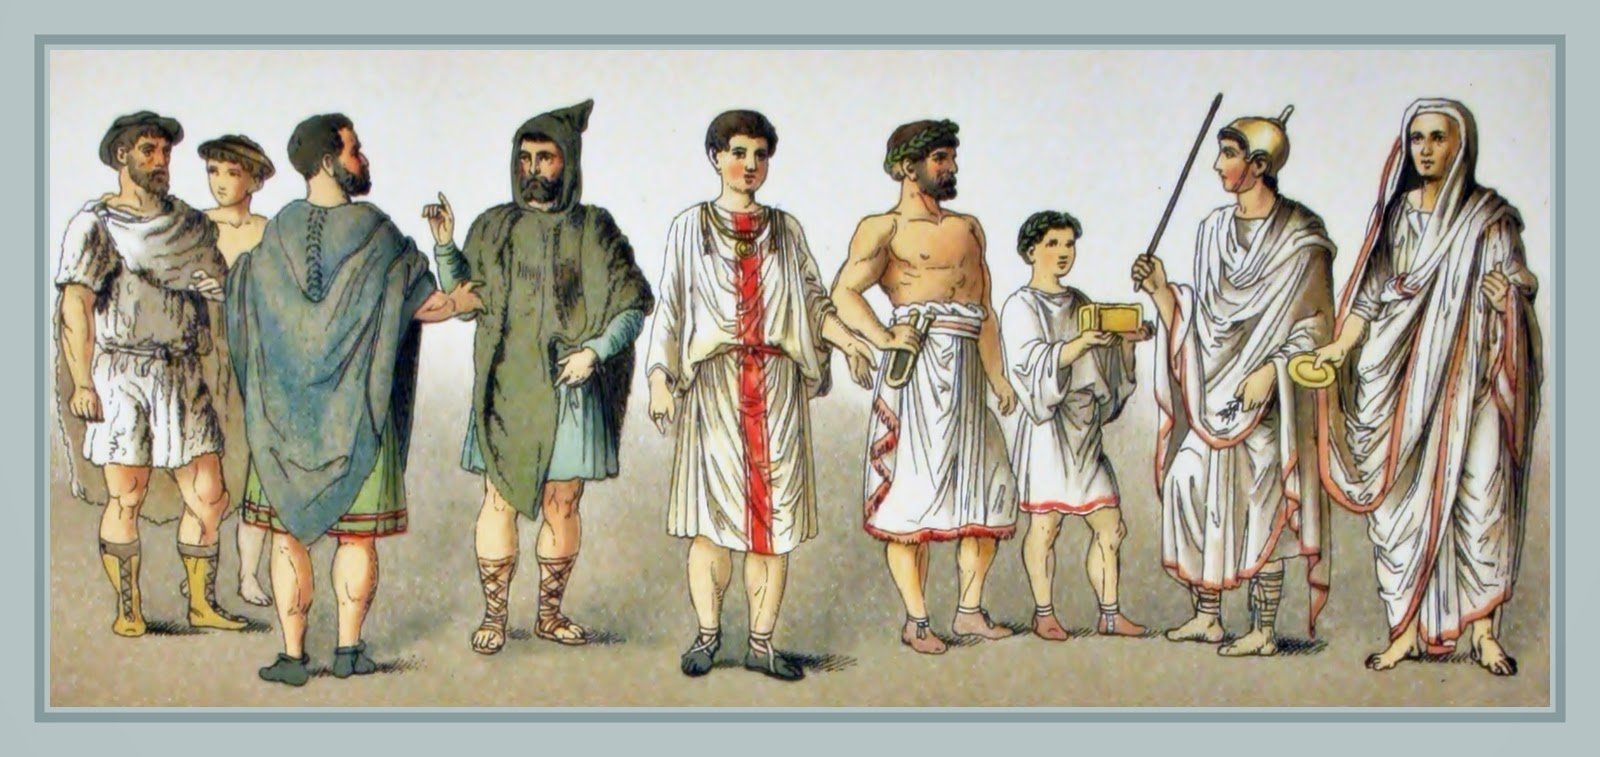 Мужчина в древние времена. Одежда римлян в древнем Риме. Тога римлян в древнем Риме. Древний Рим люди тога. Одежда патрициев в древнем Риме.